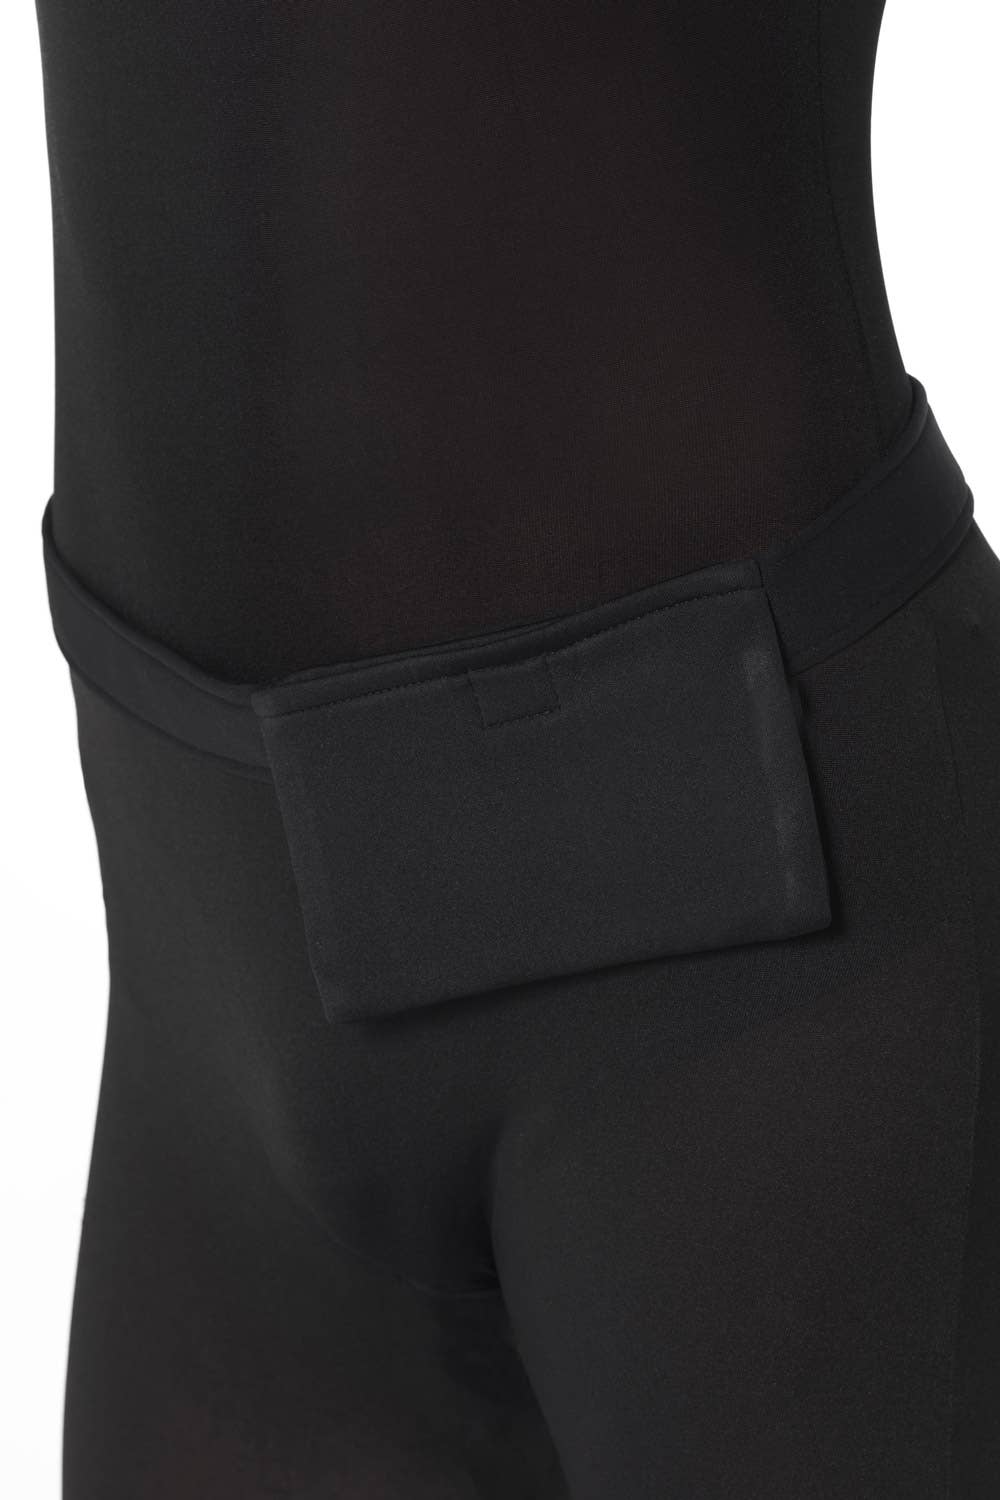 Men's Black Lycra Full Body Suit Second Skin Fancy Dress Costume Accessory View